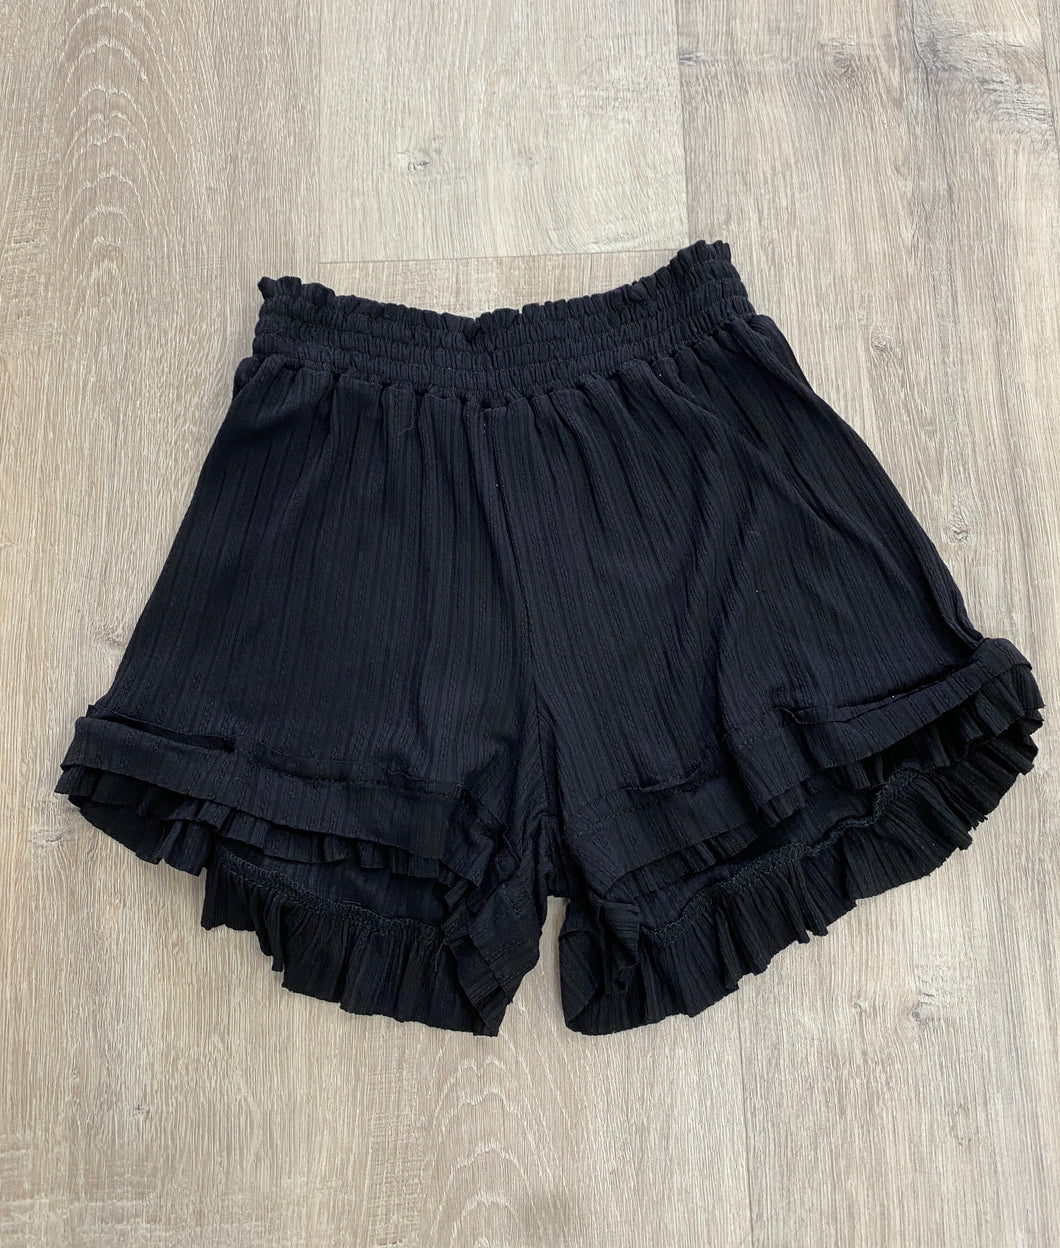 Black Ruffle Shorts